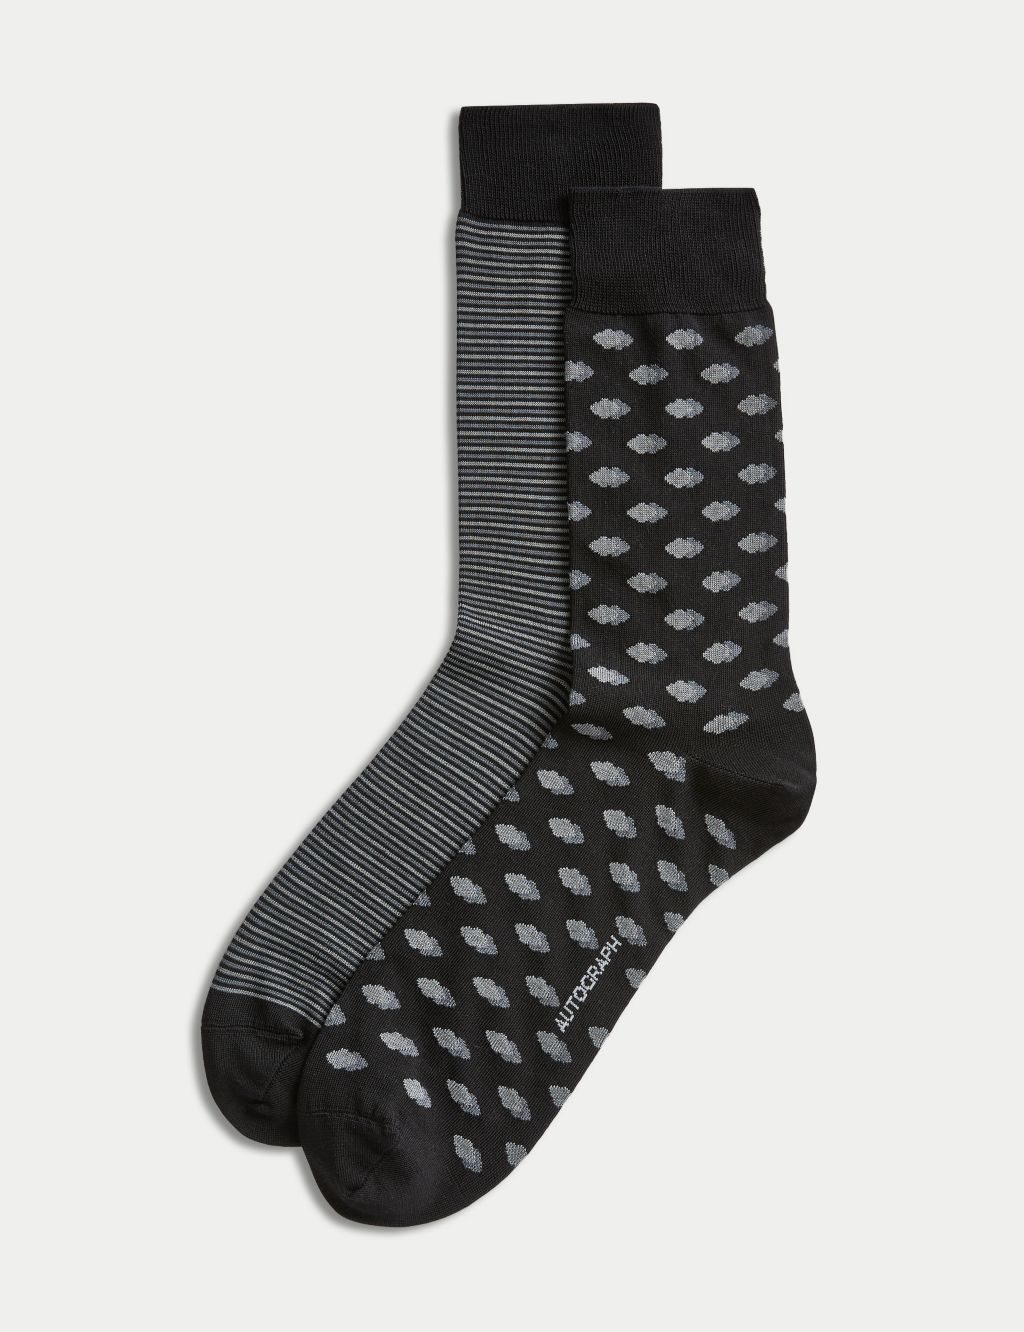 Men's Socks | M&S